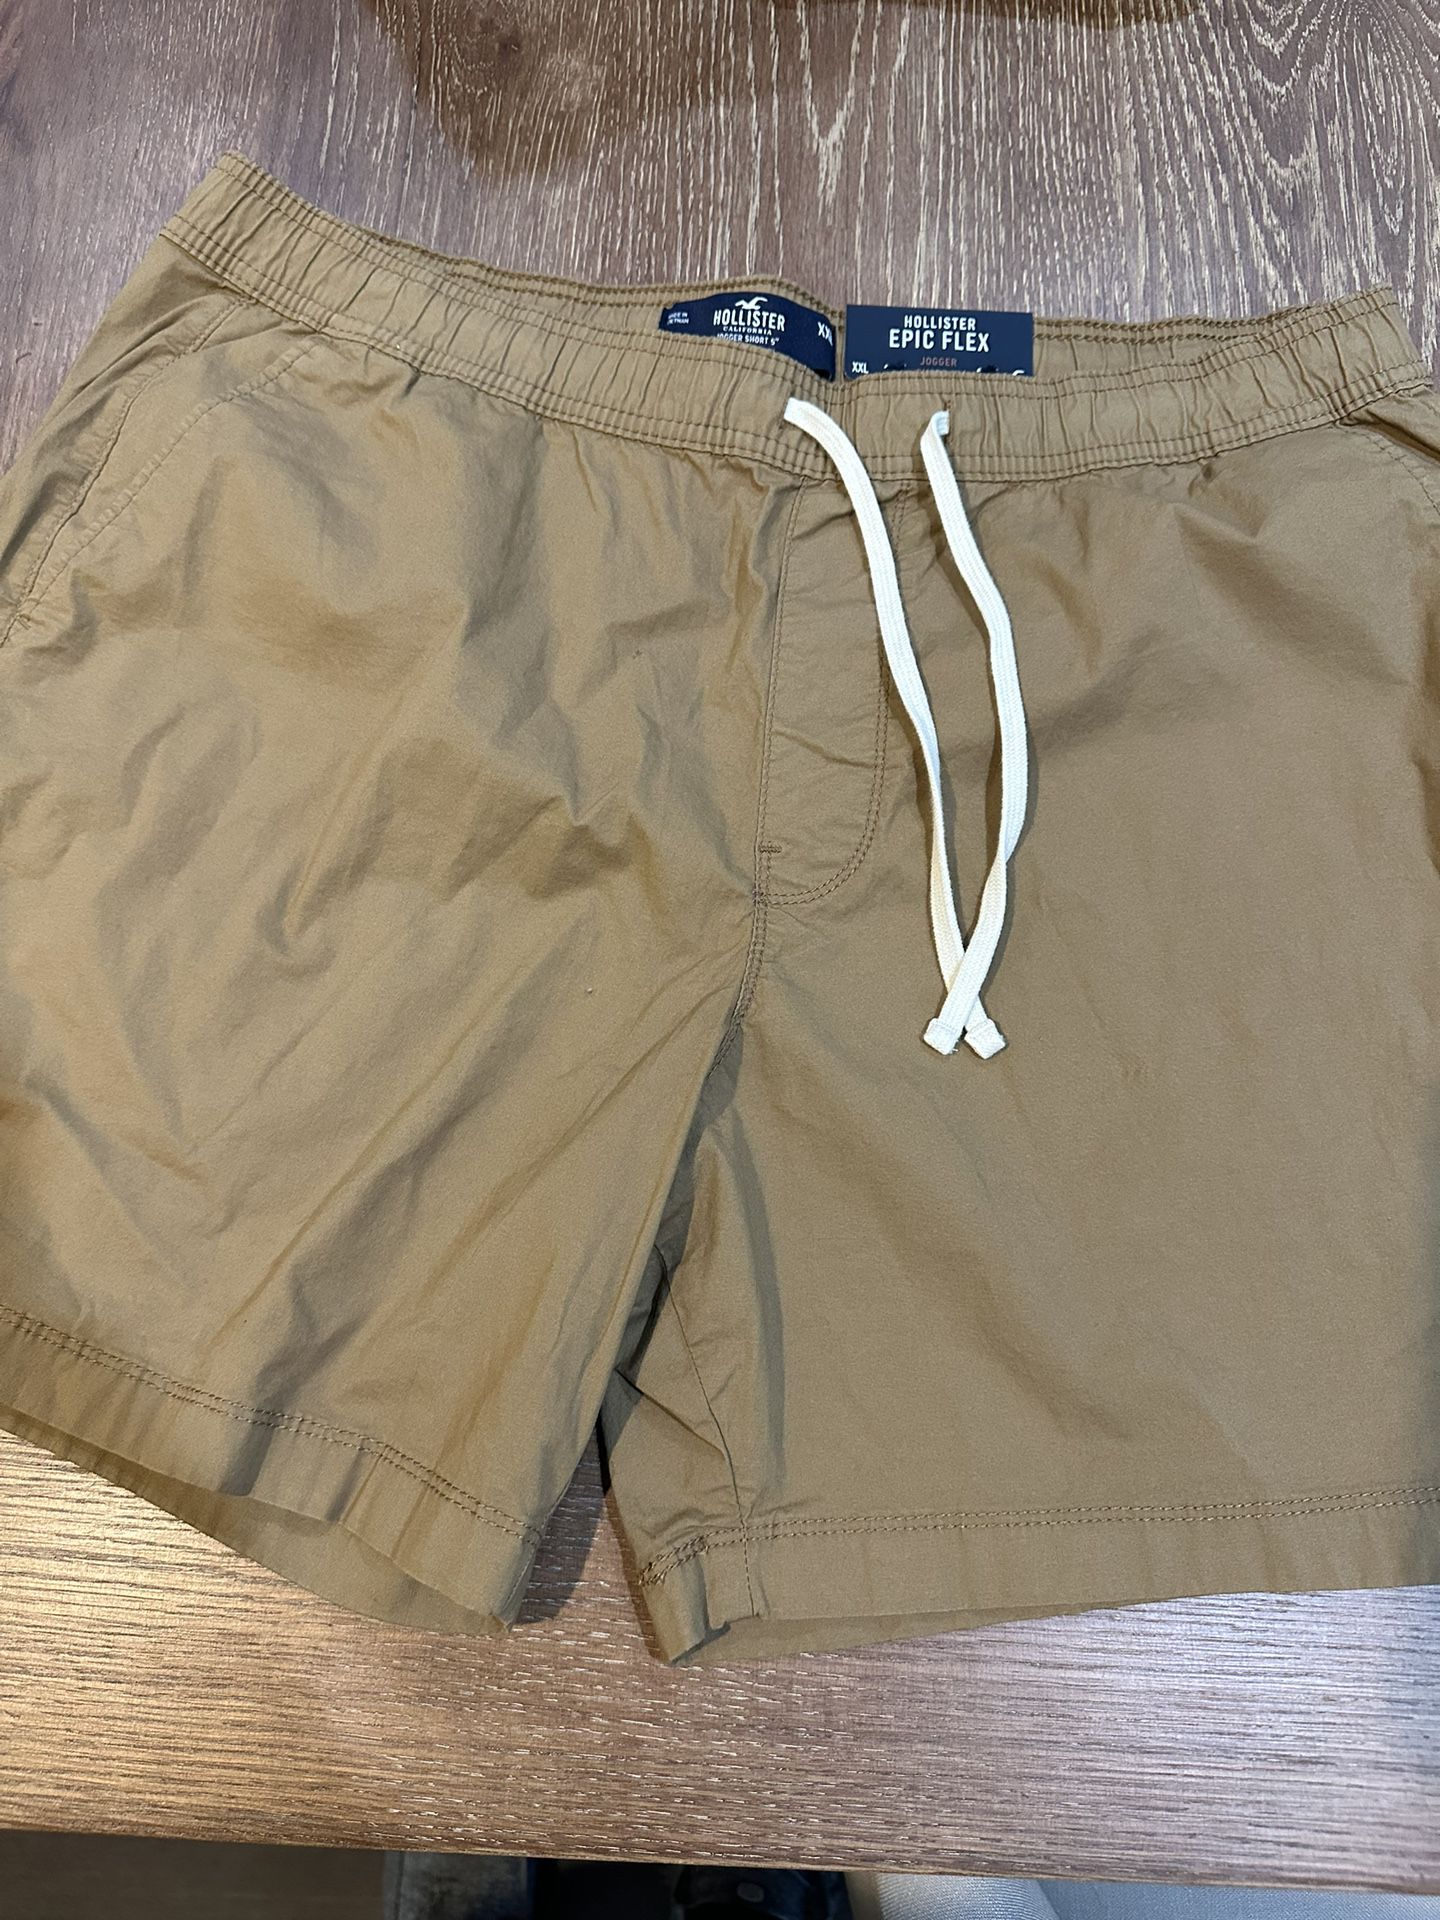 Hollister Men’s 5” Jogger Shorts 2xl Lot Of 2 